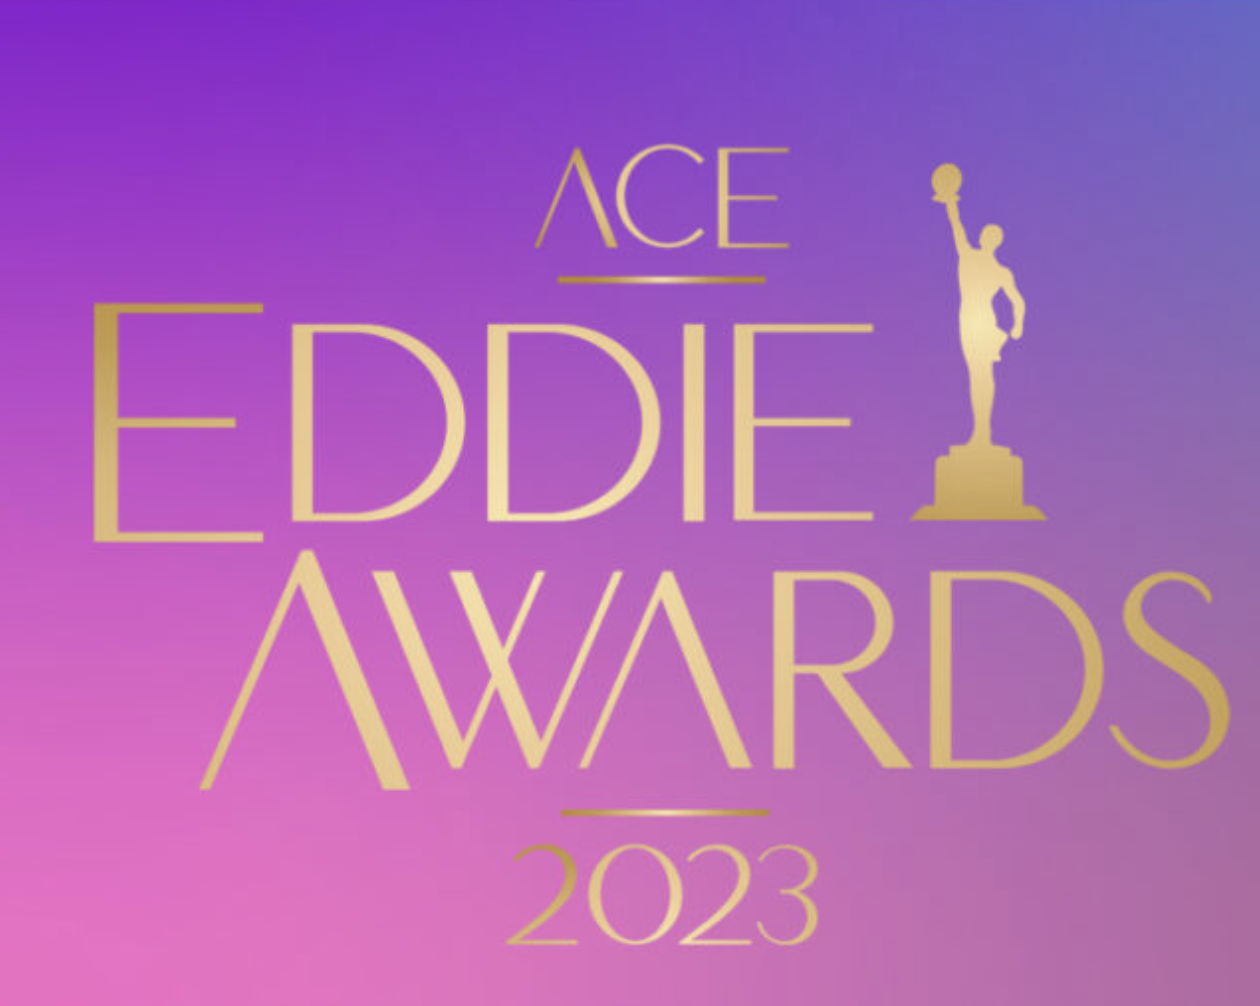 ACE Eddie Awards 2023 tutte le nomination Superga Cinema